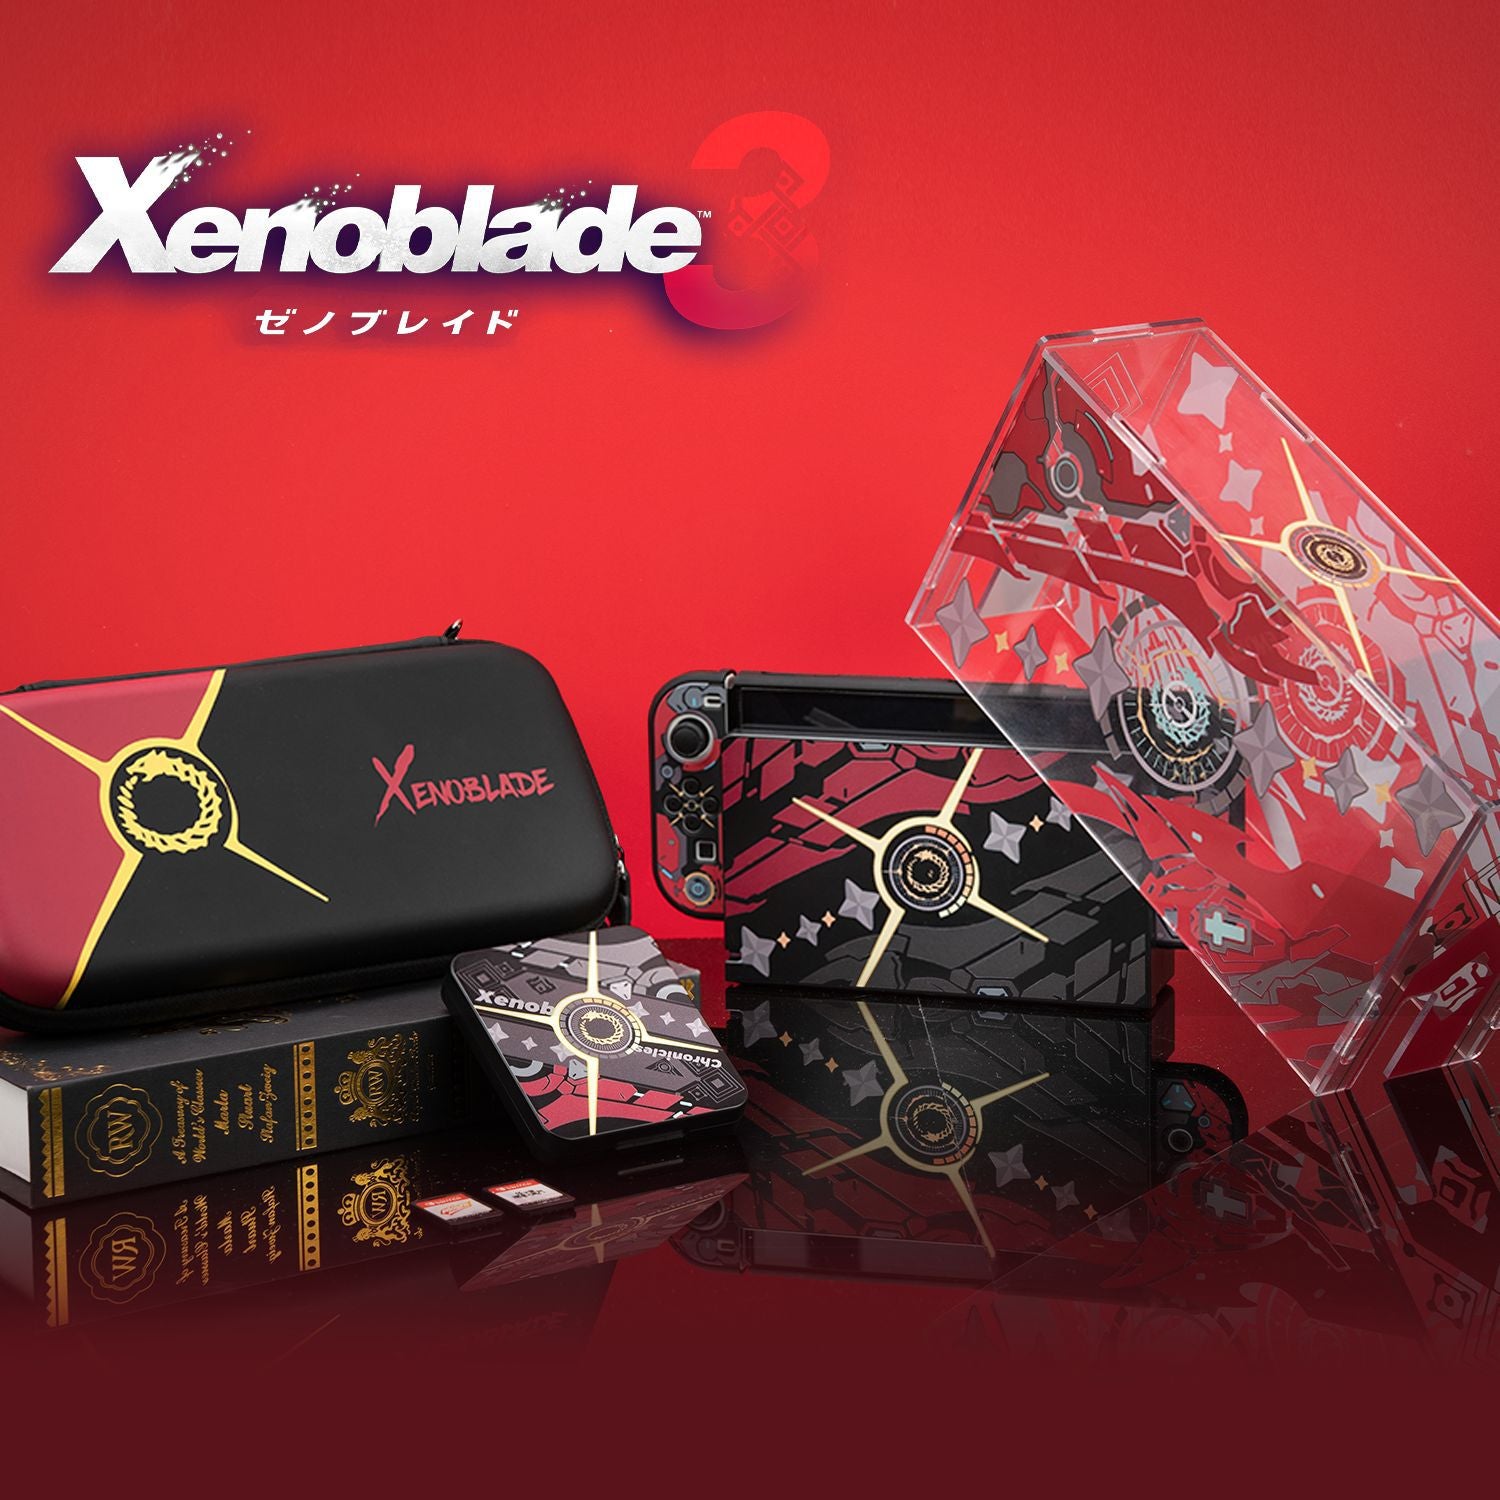 Xenoblade Chronicles 3, Nintendo Switch games, Games